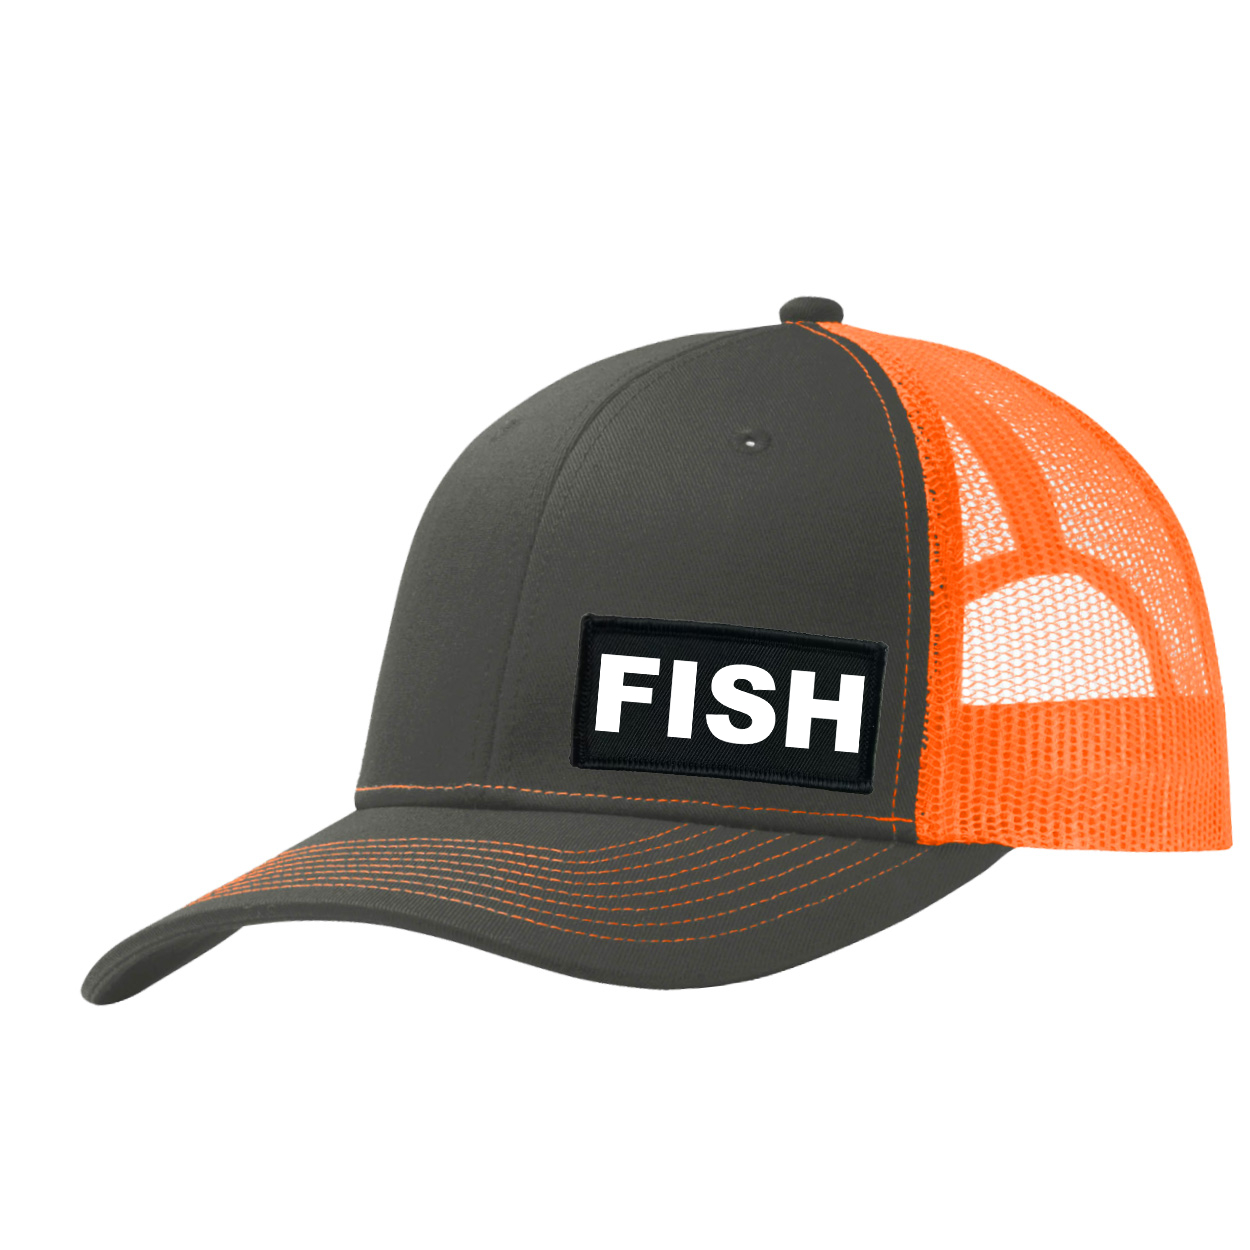 Fish Brand Logo Night Out Woven Patch Snapback Trucker Hat Dark Gray/Orange (White Logo)